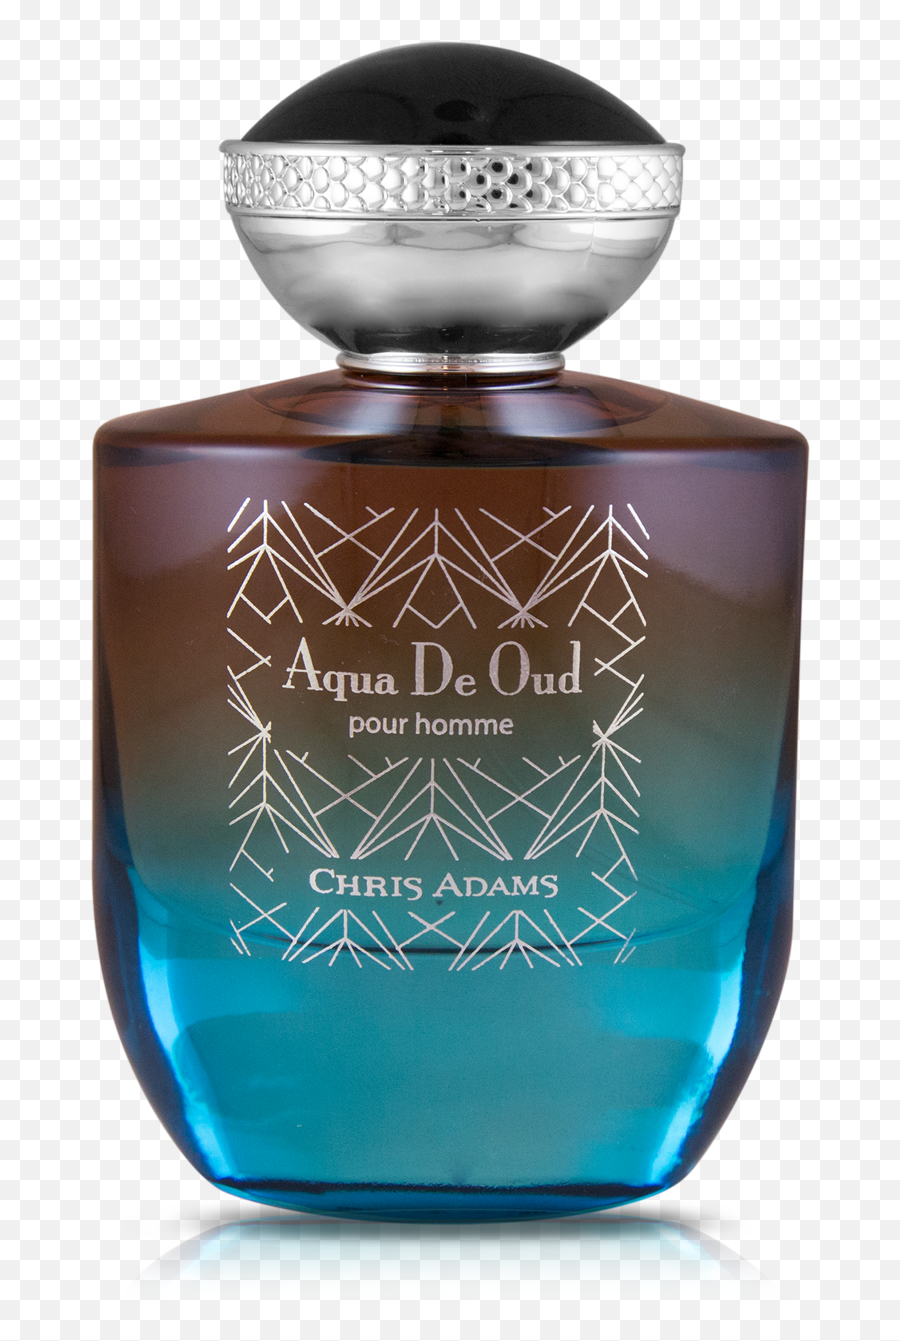 Chris Adams - Chris Adams Aqua De Oud Emoji,Emotions Perfume Price In Pakistan